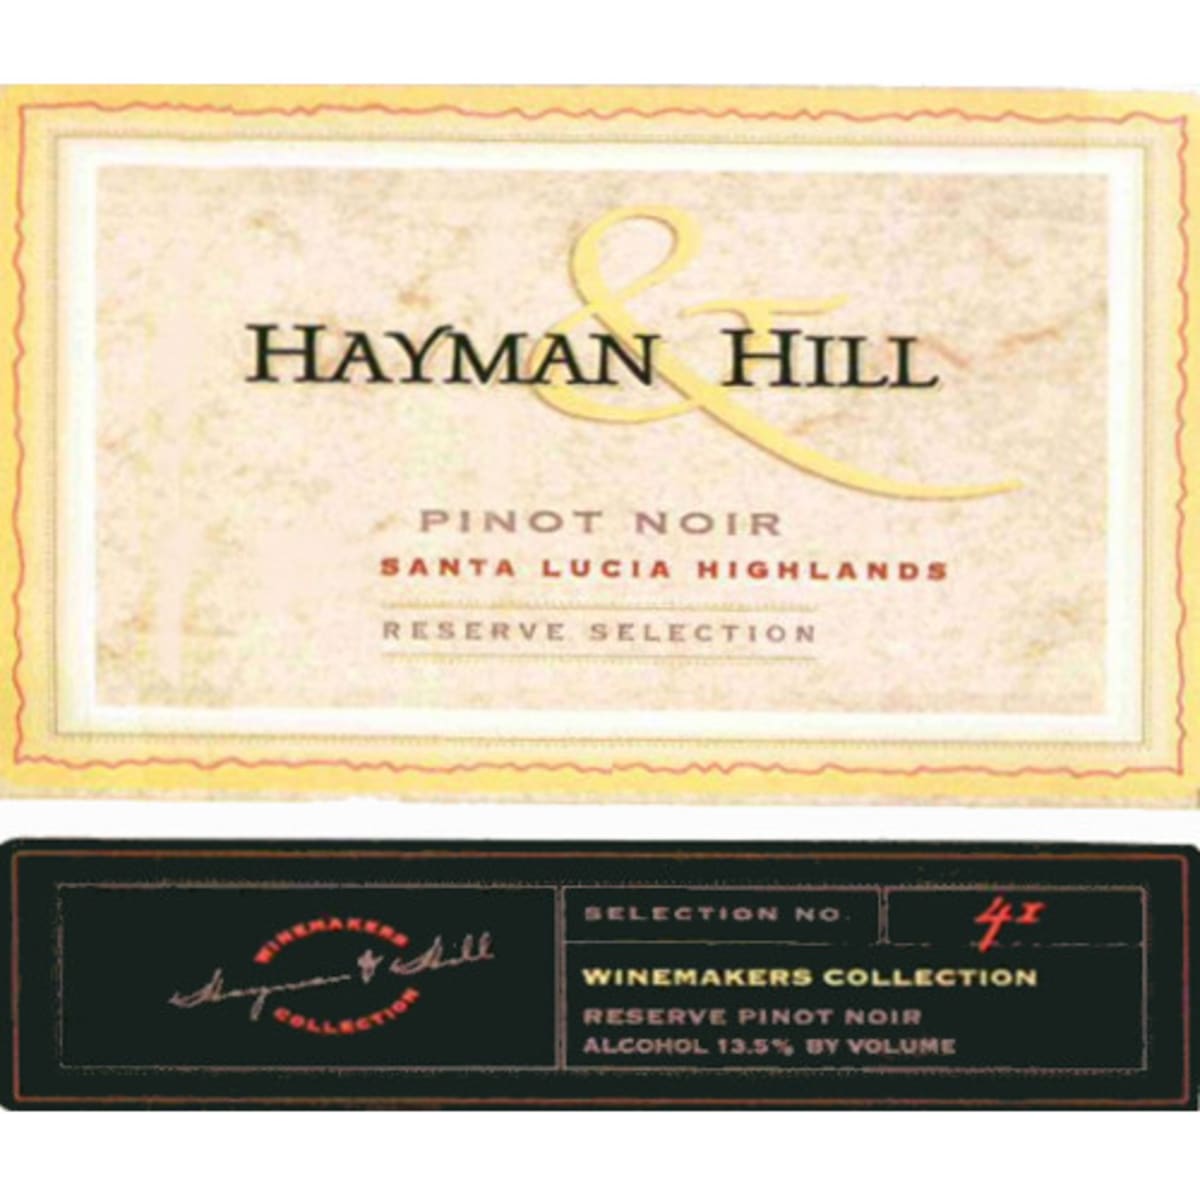 Hayman & Hill Santa Lucia Highlands Pinot Noir 2008 Front Label